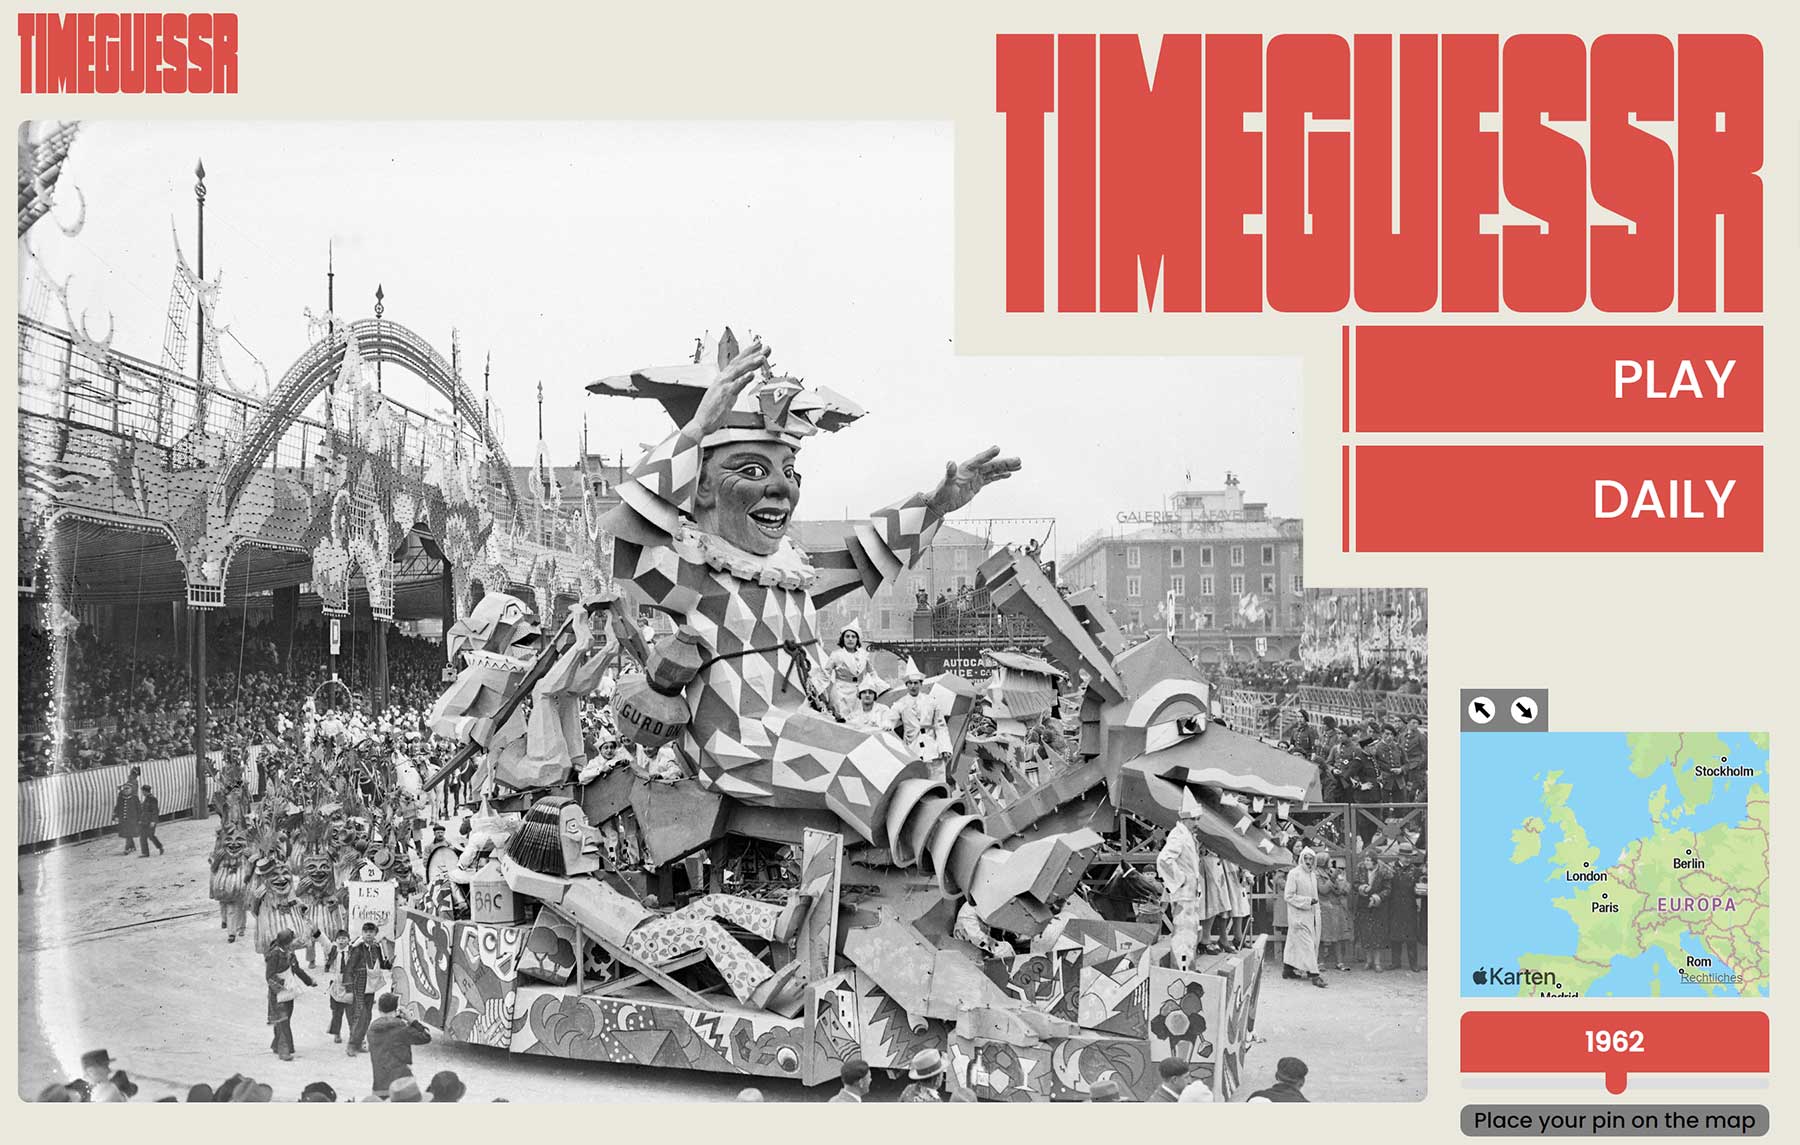 Browserspiel "TimeGuessr": Wann & wo entstanden die Fotos? Timeguessr-01 